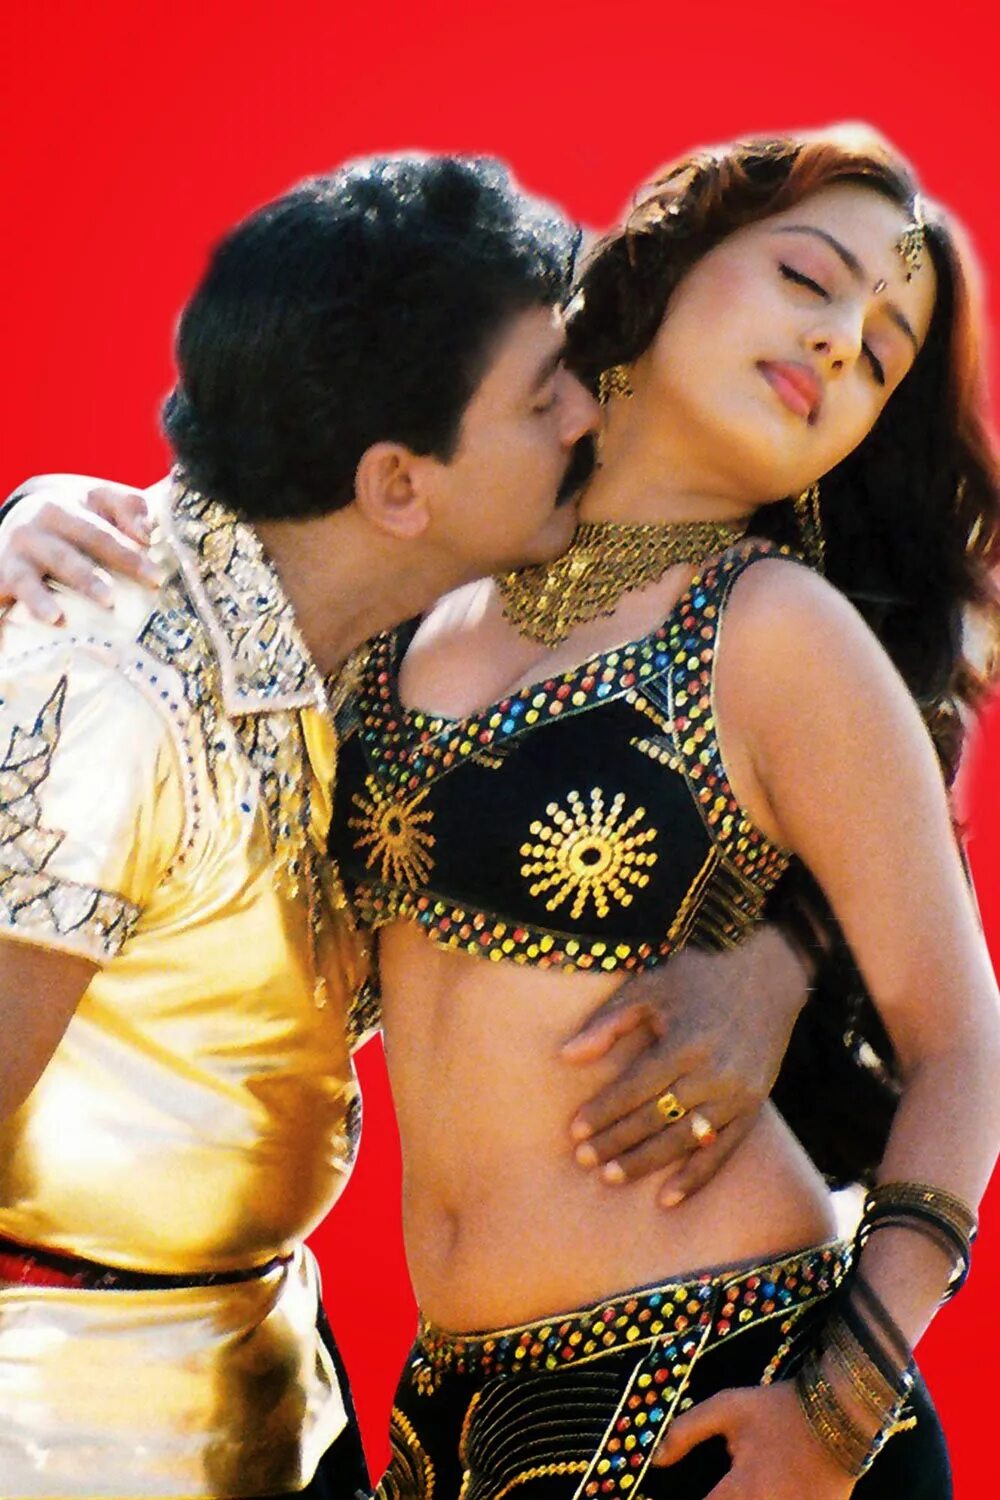 Telugu hot movies. Hot movie 18 Tamil Full English 2015. Telugu movies